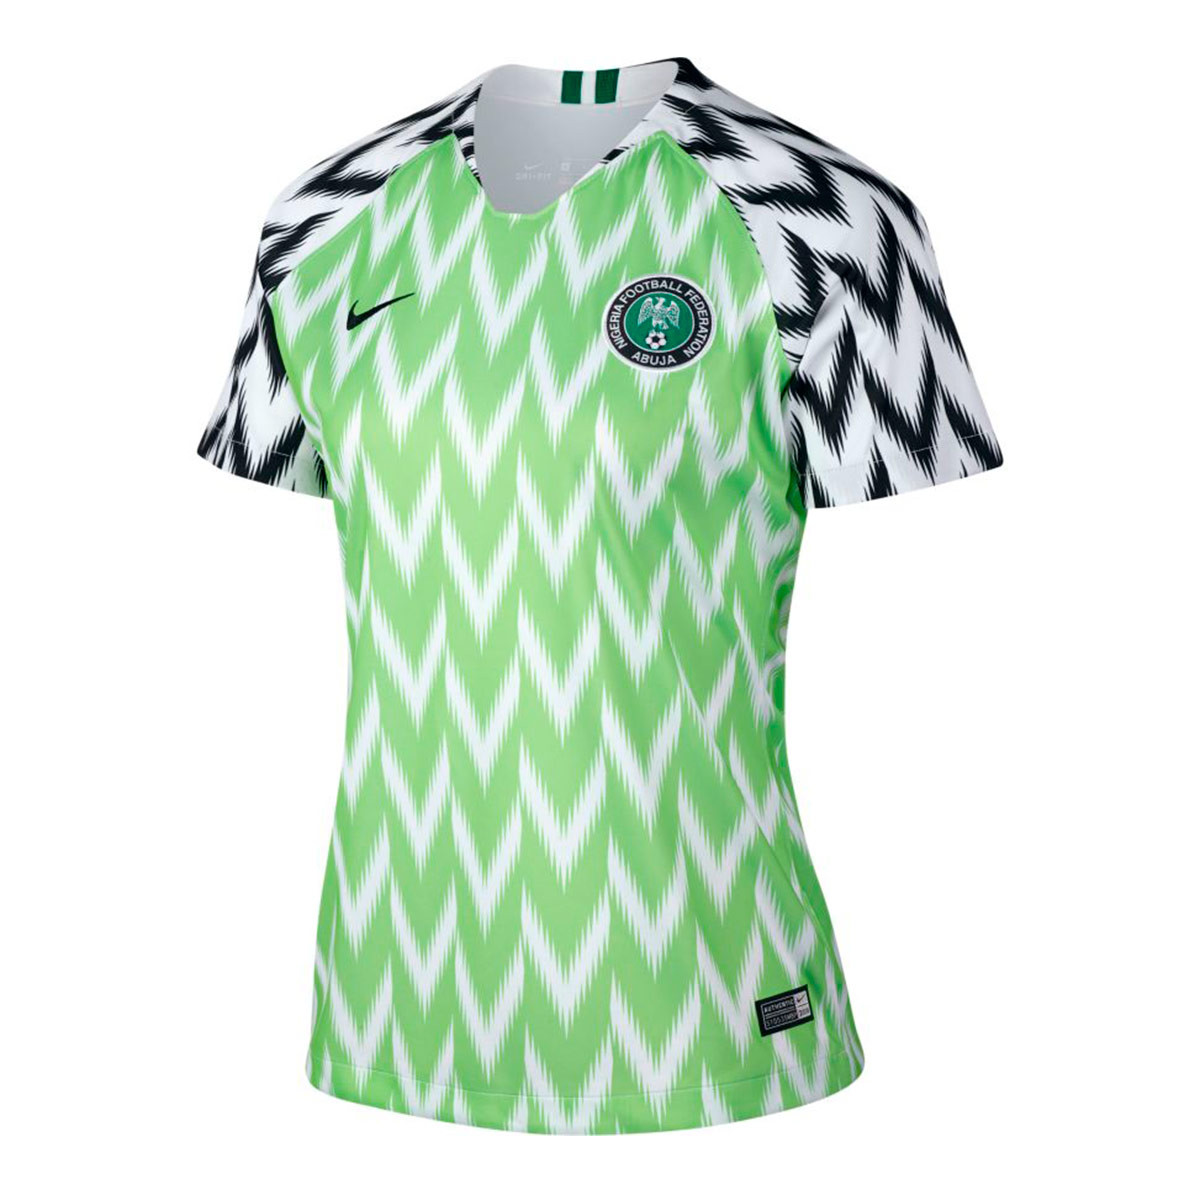 nigeria 2019 jersey